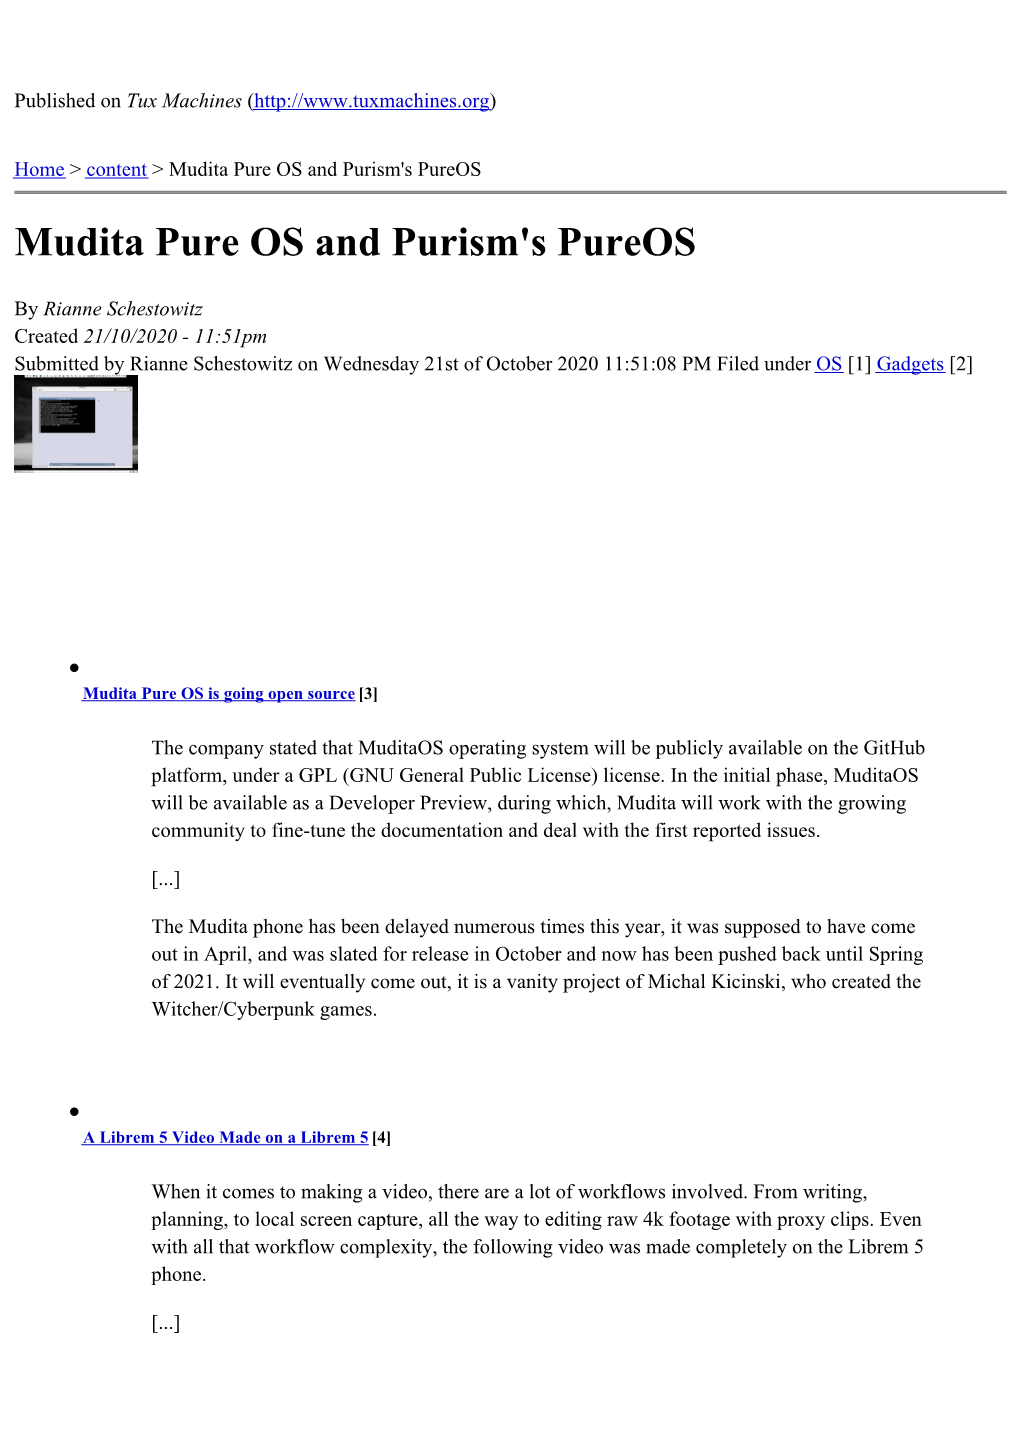 Mudita Pure OS and Purism's Pureos